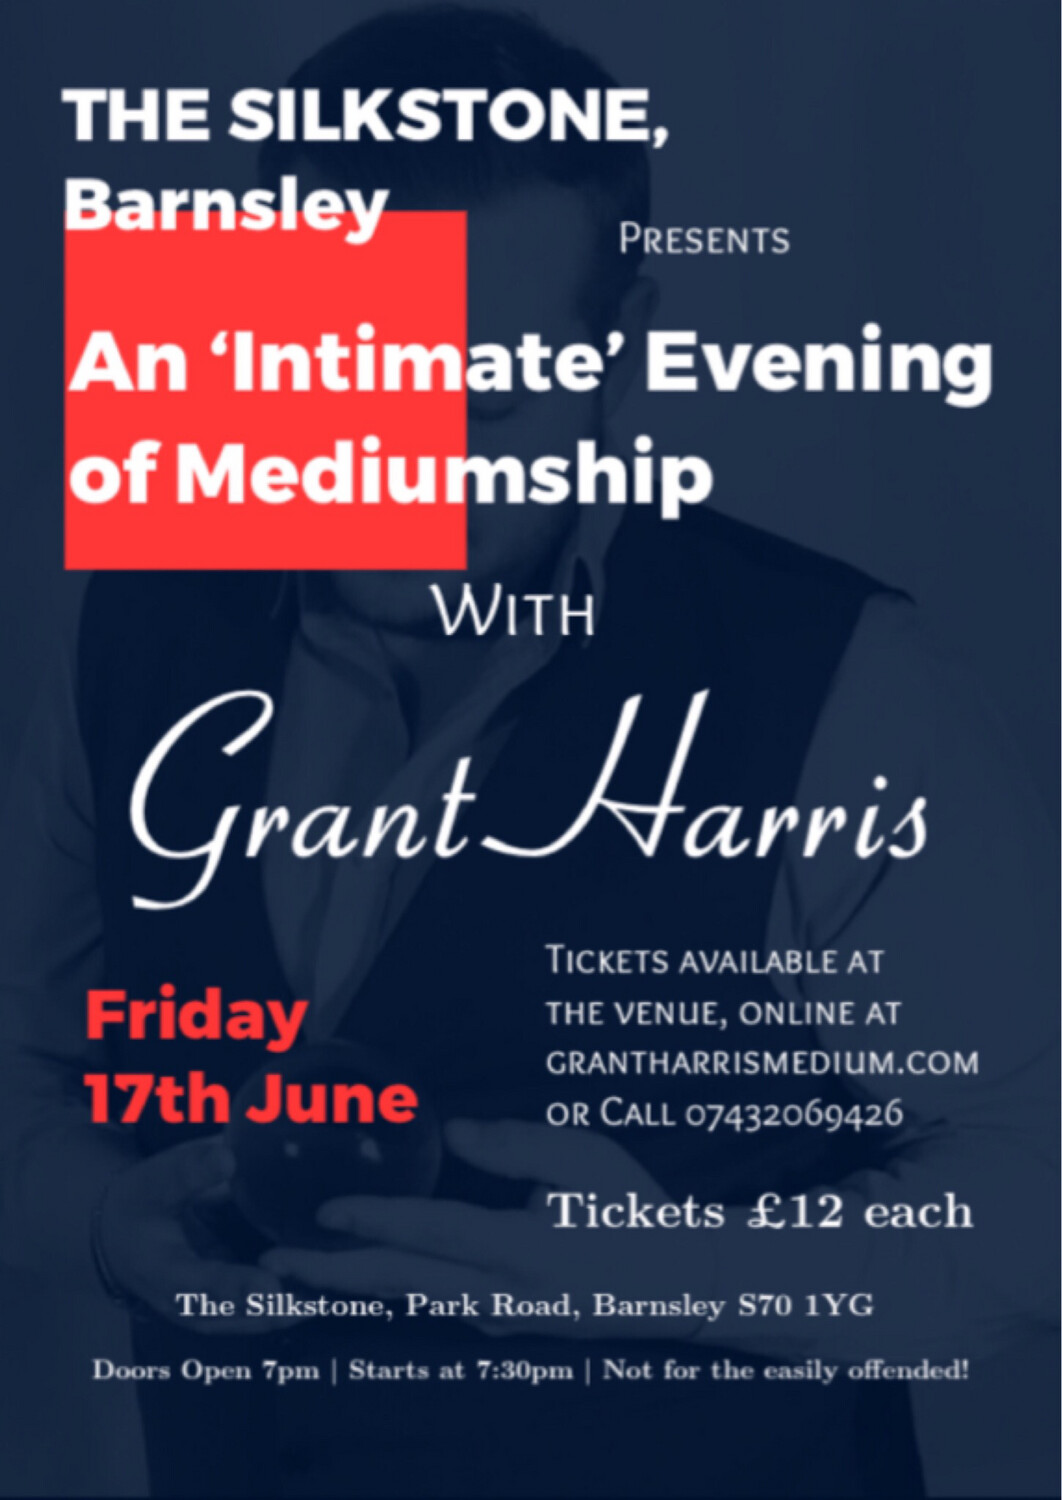 An Intimate Evening of Mediumship, The Silkstone, Barnsley, Fri 17th June 2022